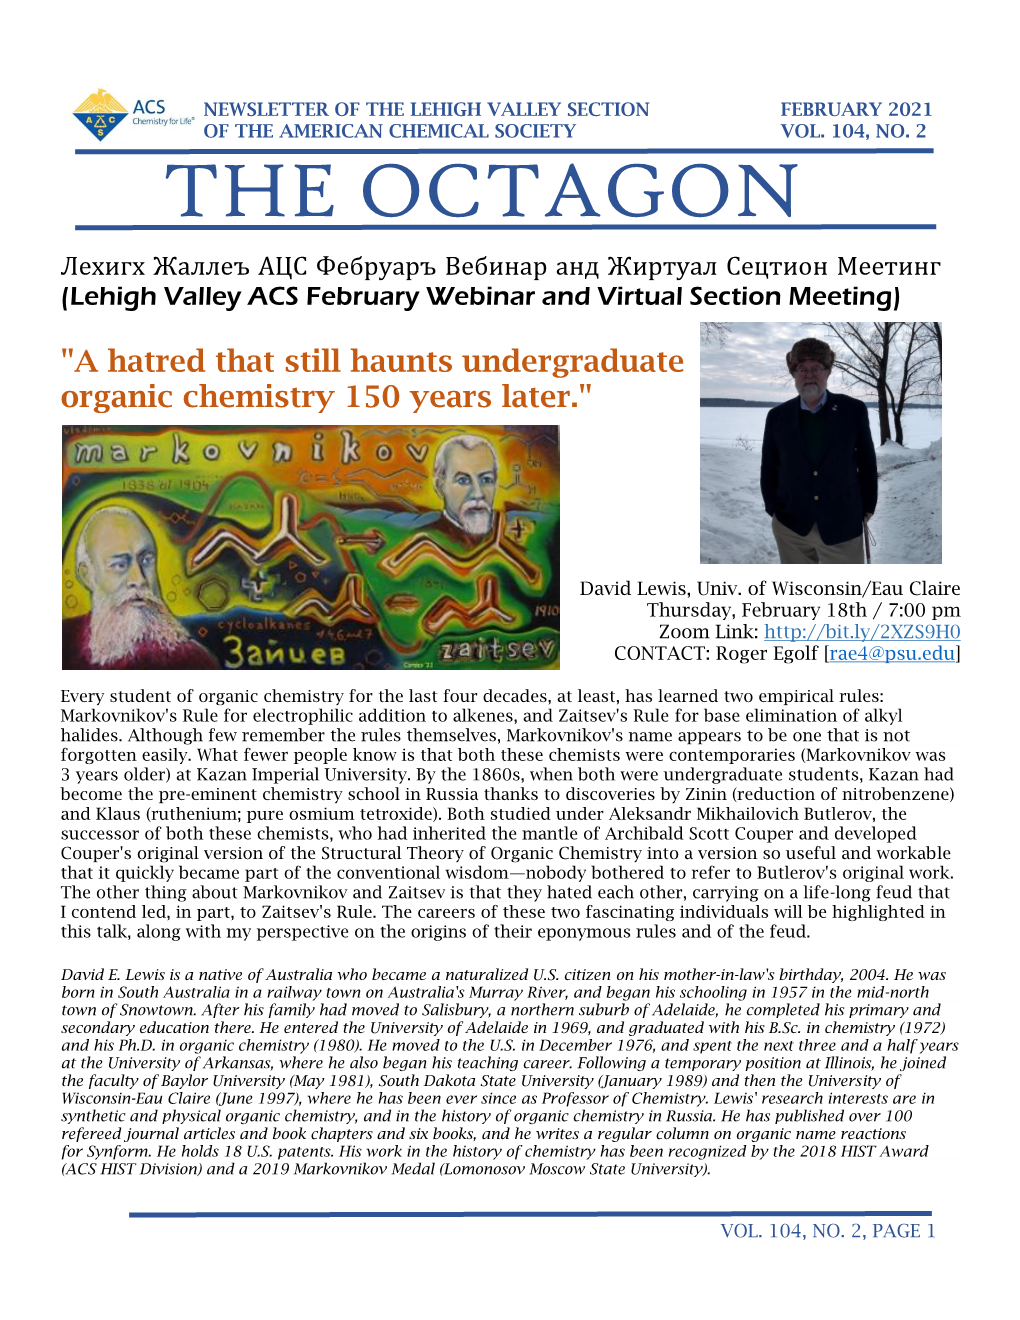 Octagon Volume 104 No 2 February 2021.Pdf ‏2538 KB